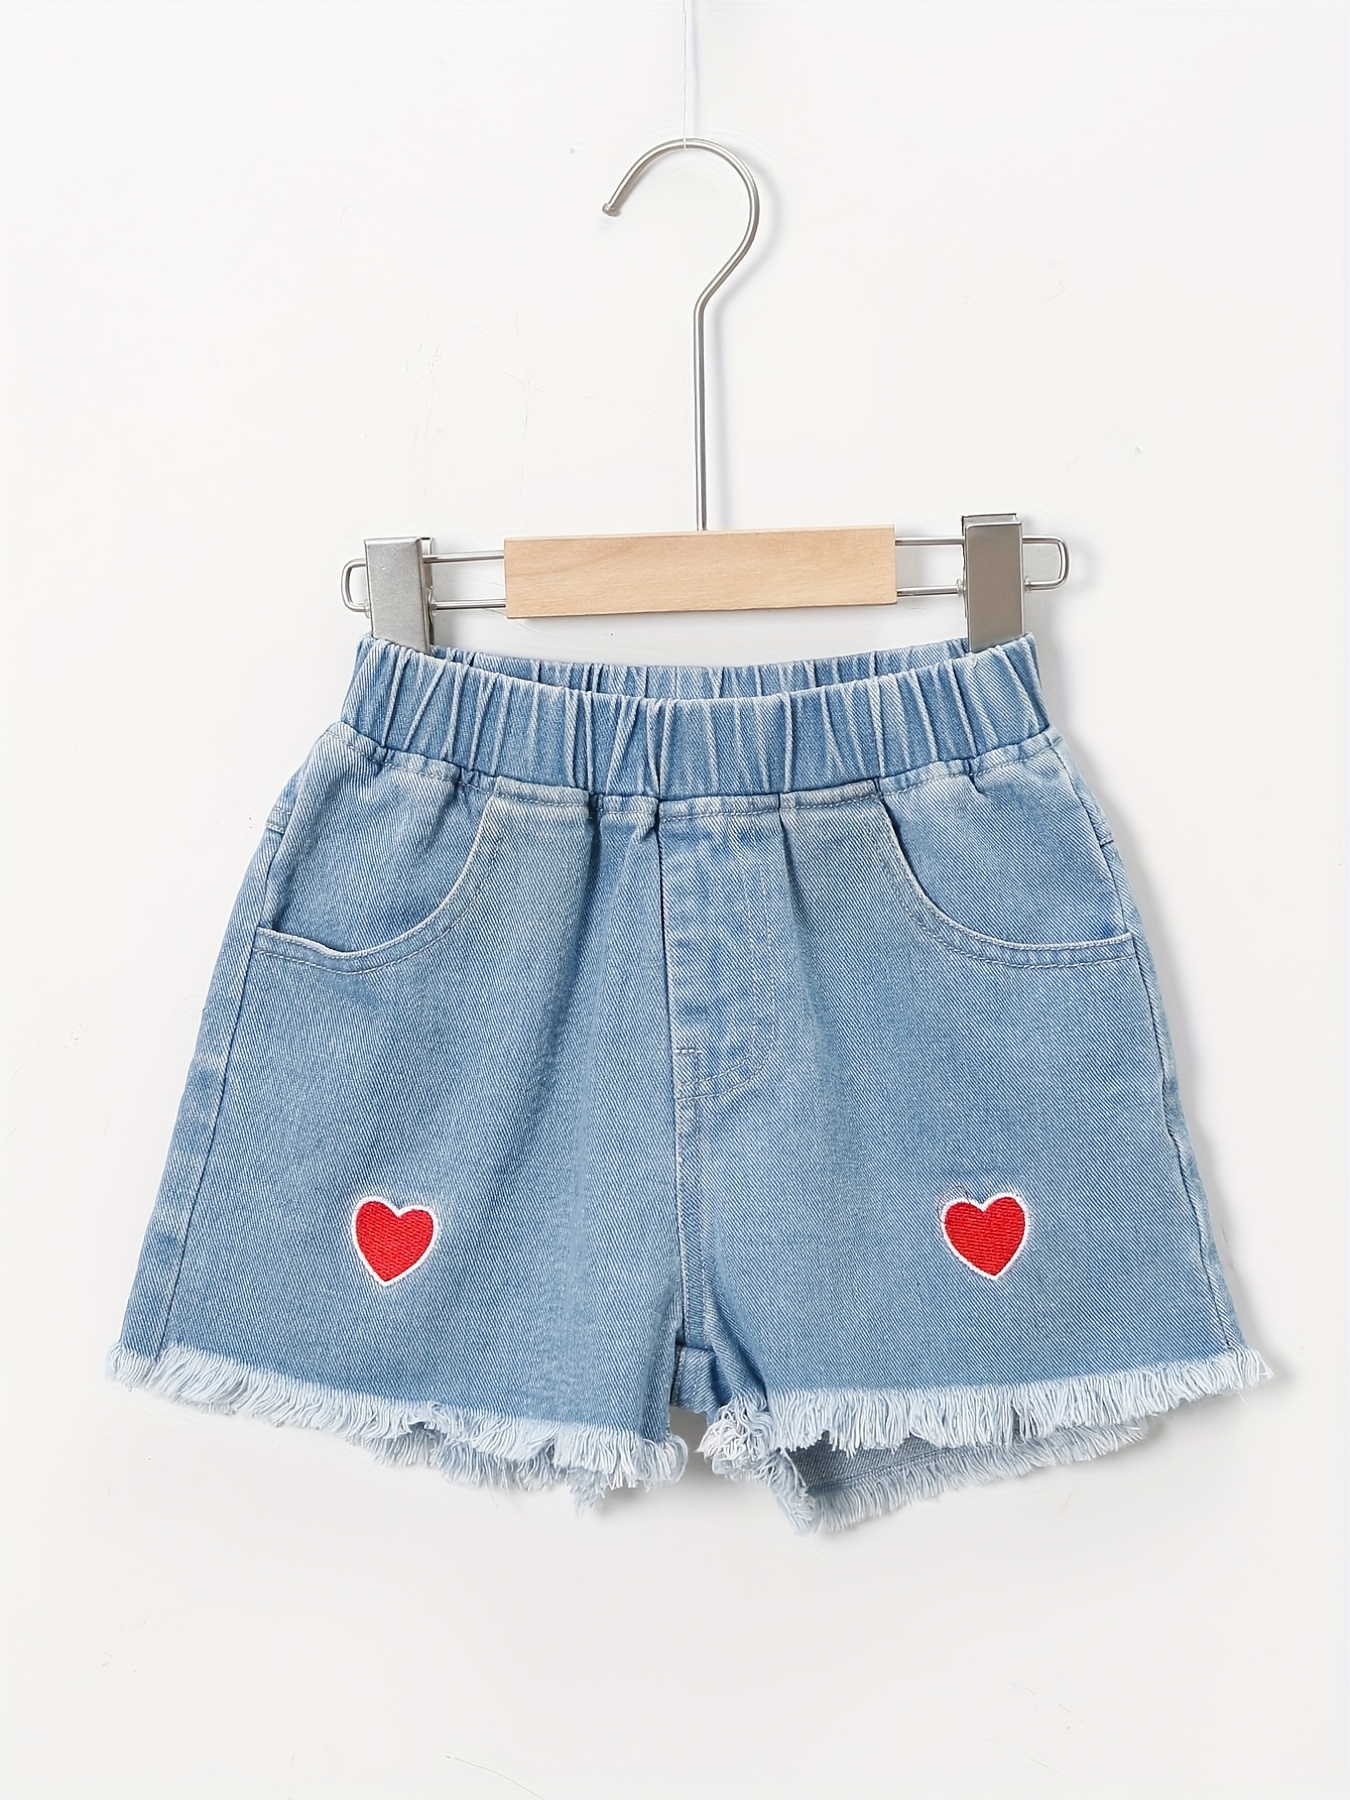 Girl Jeans Shorts Kids Denim Short Pants Baby Casual Shorts Beach